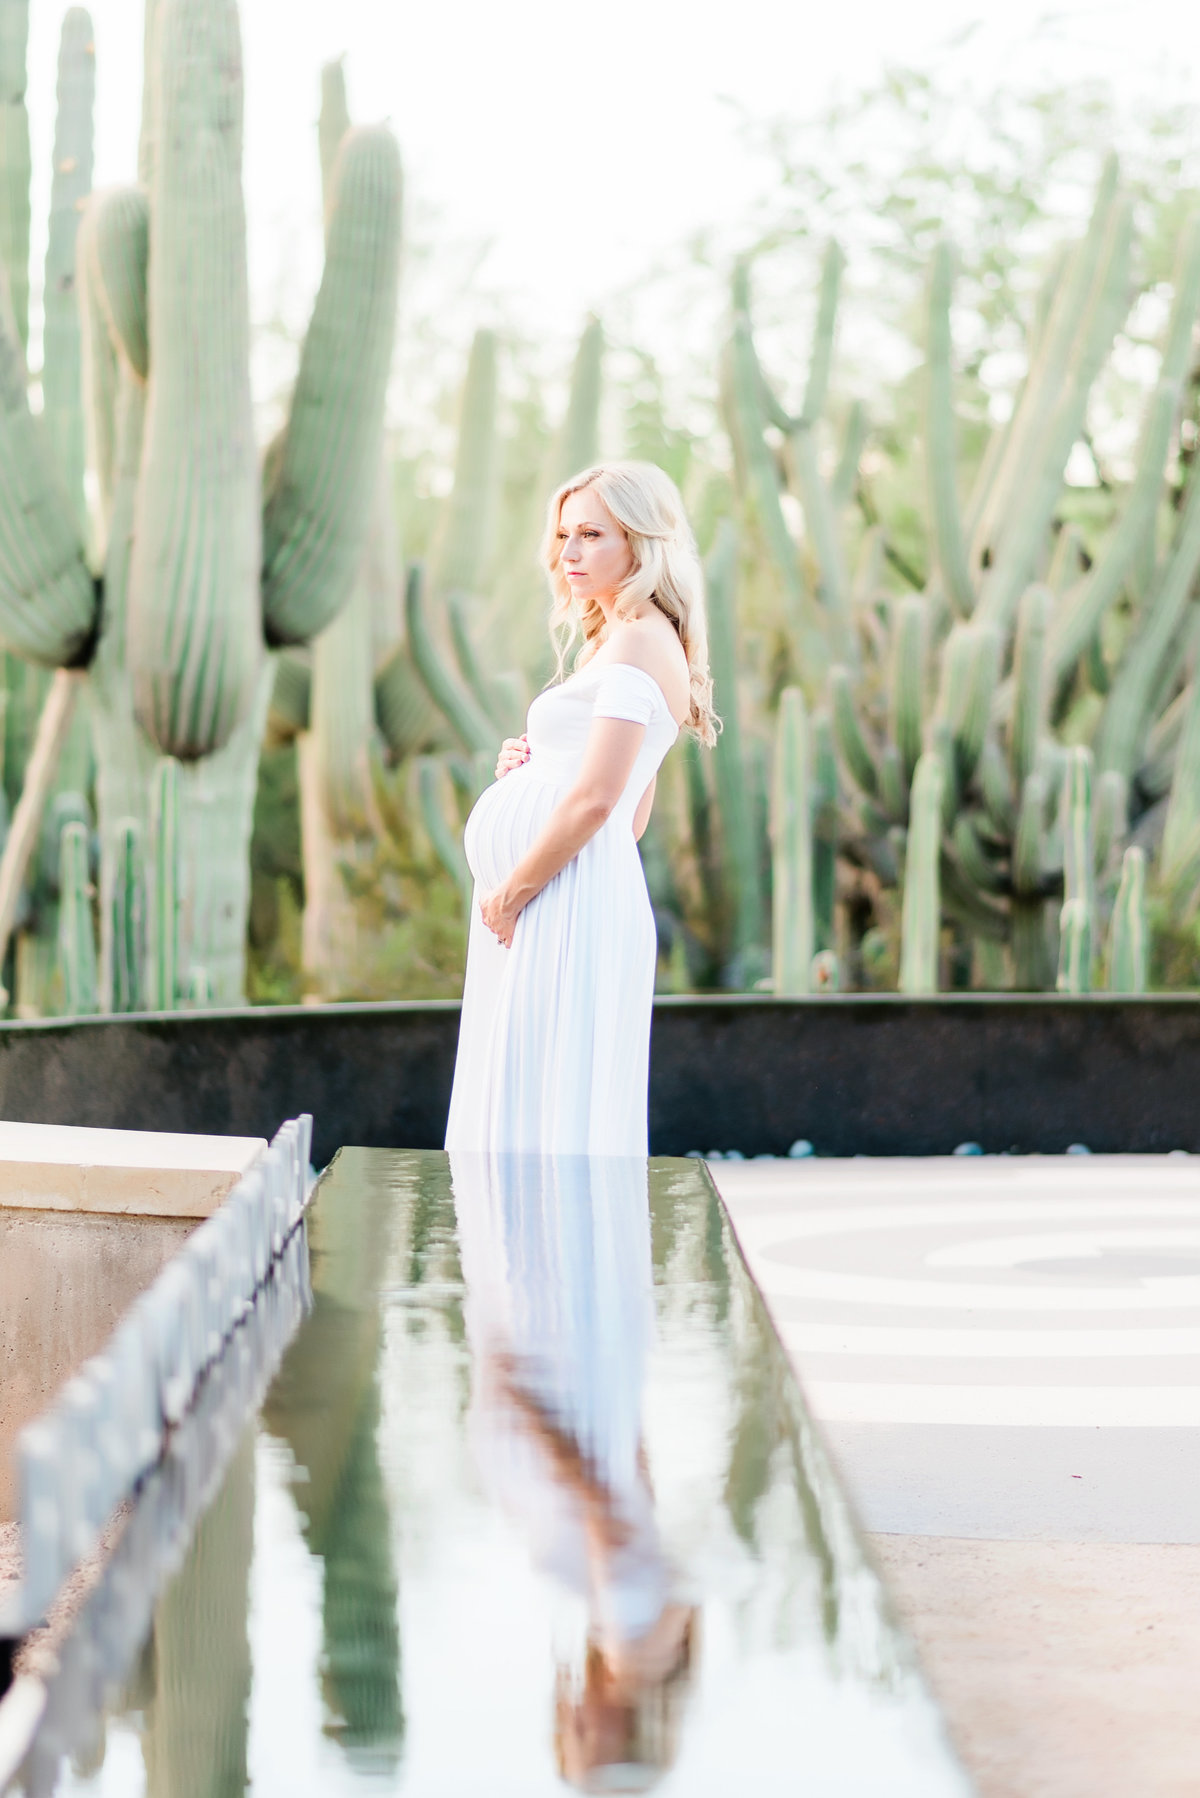 Dorota's-Maternity-Session-Phoenix-Arizona-Ashley-Flug-Photography69